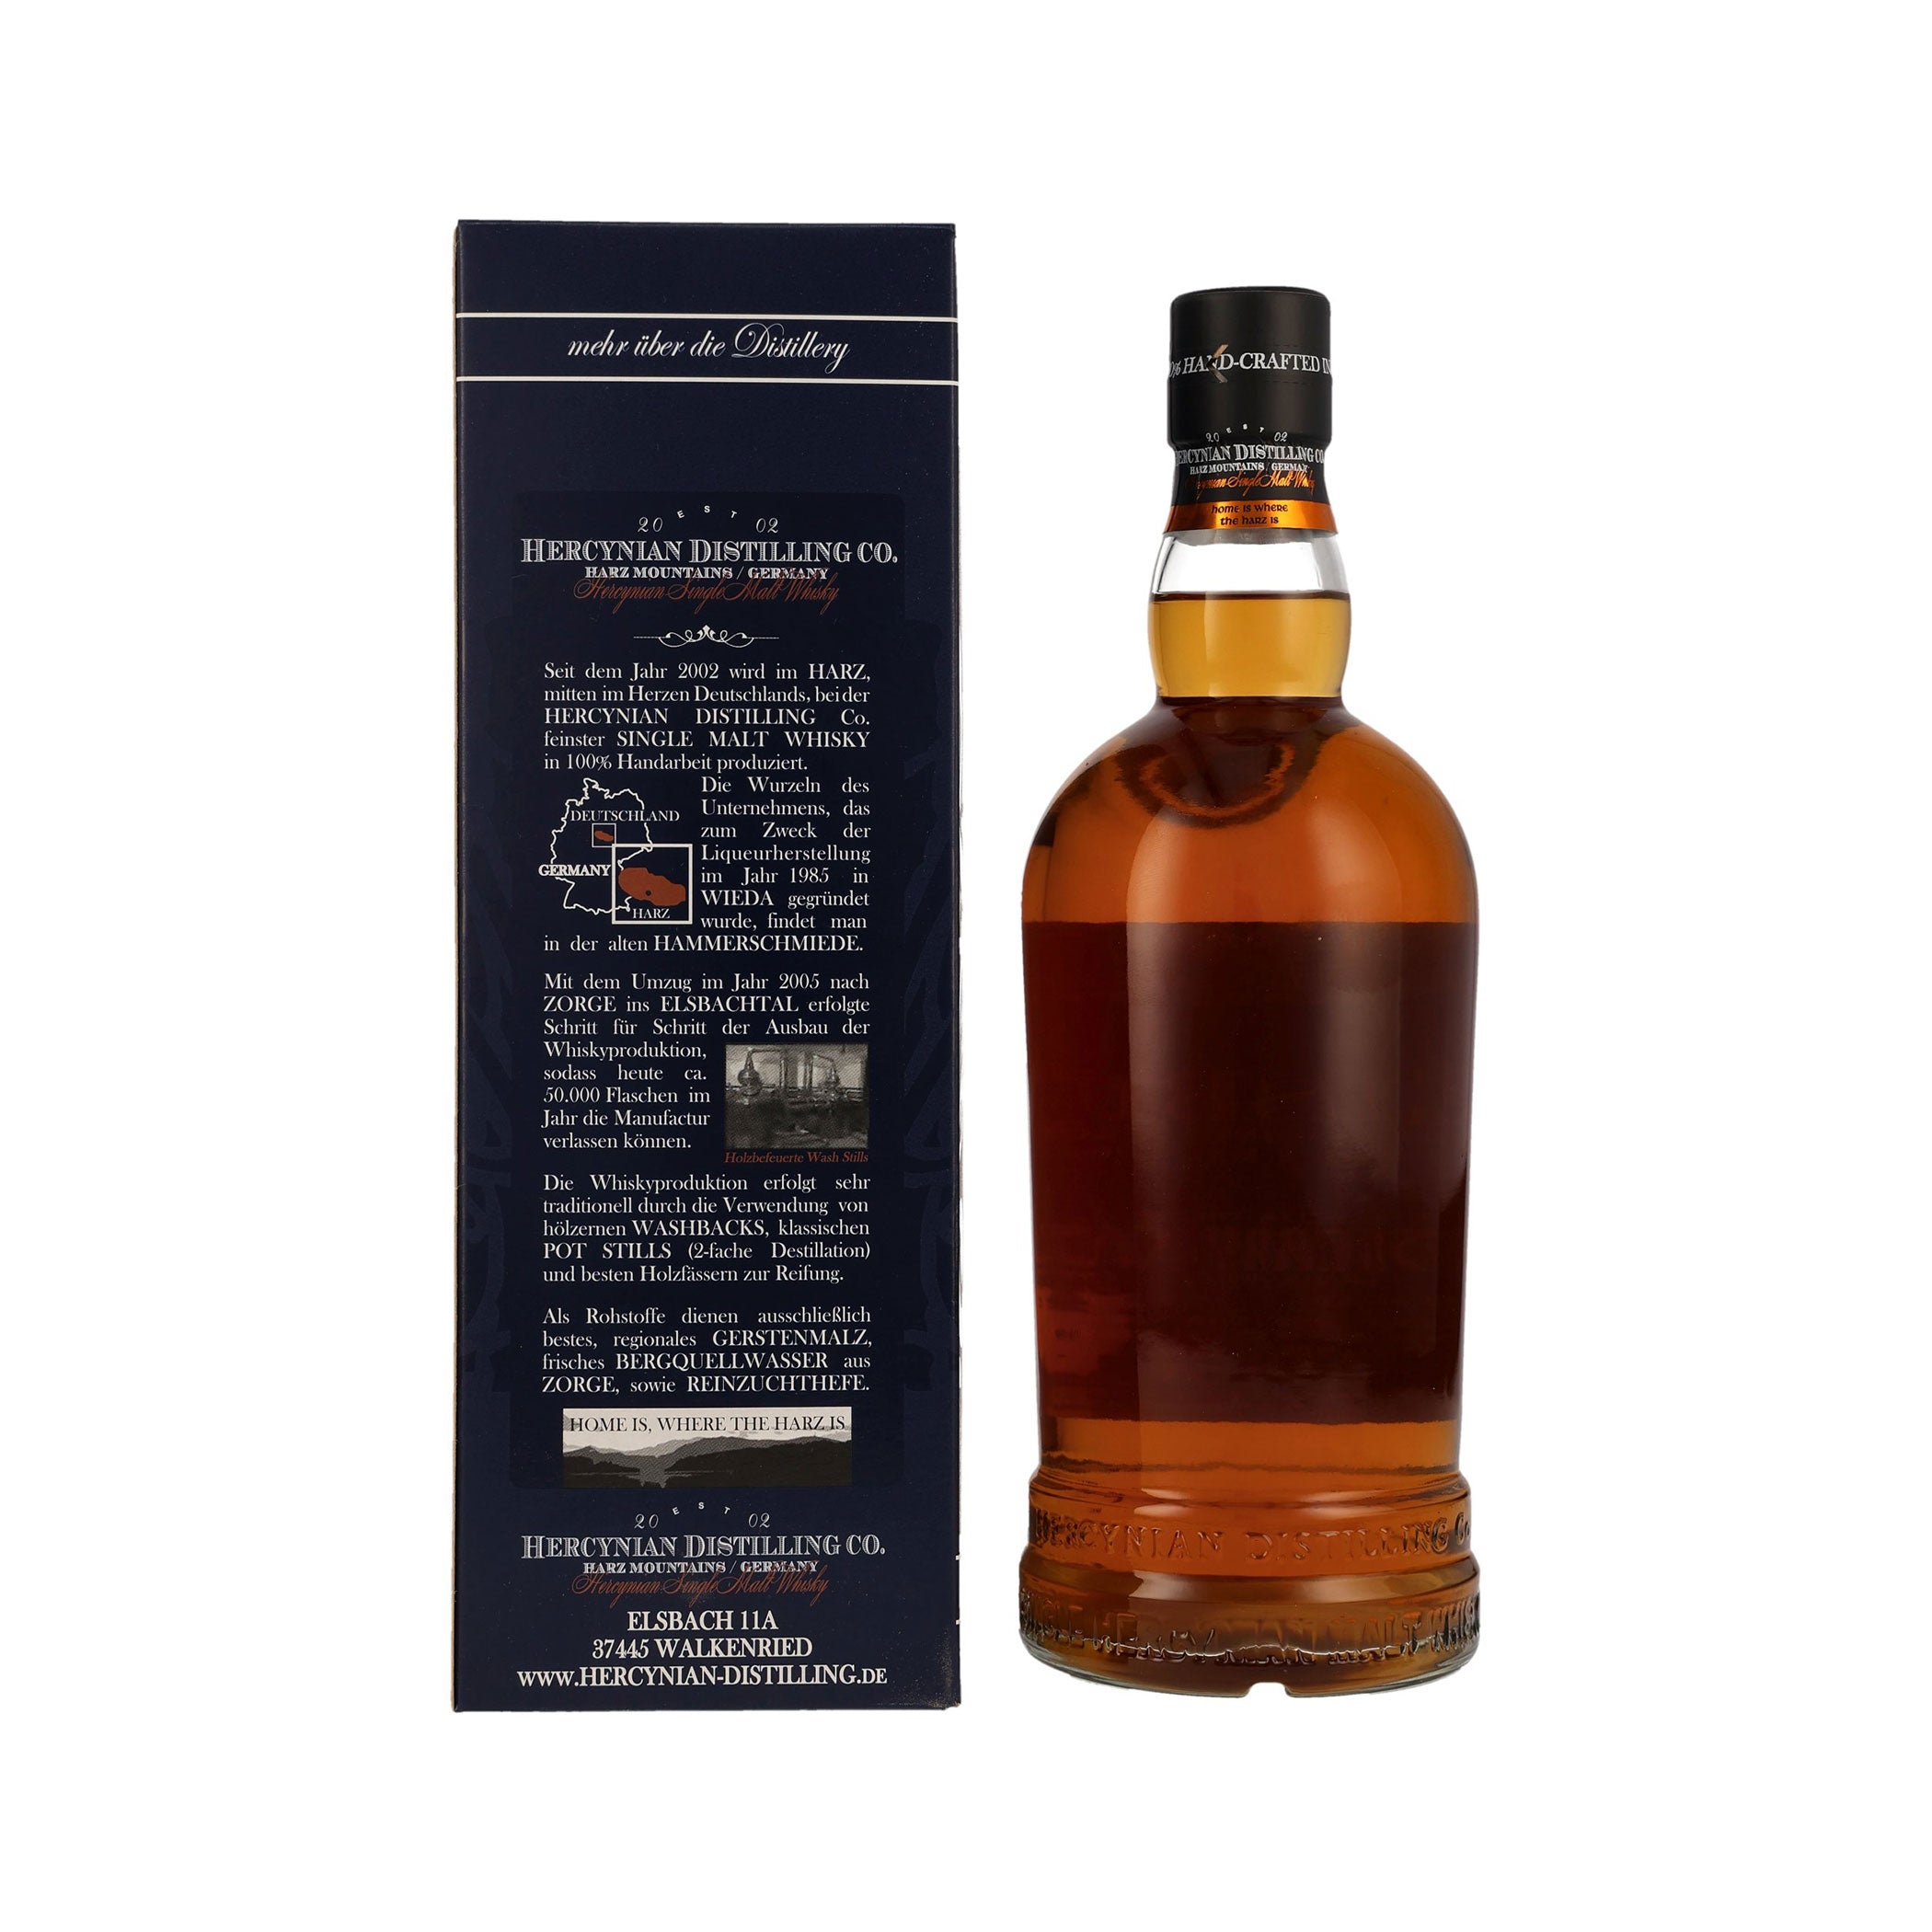 ElsBurn Distillery Edition Batch 004 - 2023 - The Original Hercynian Single Malt Whisky